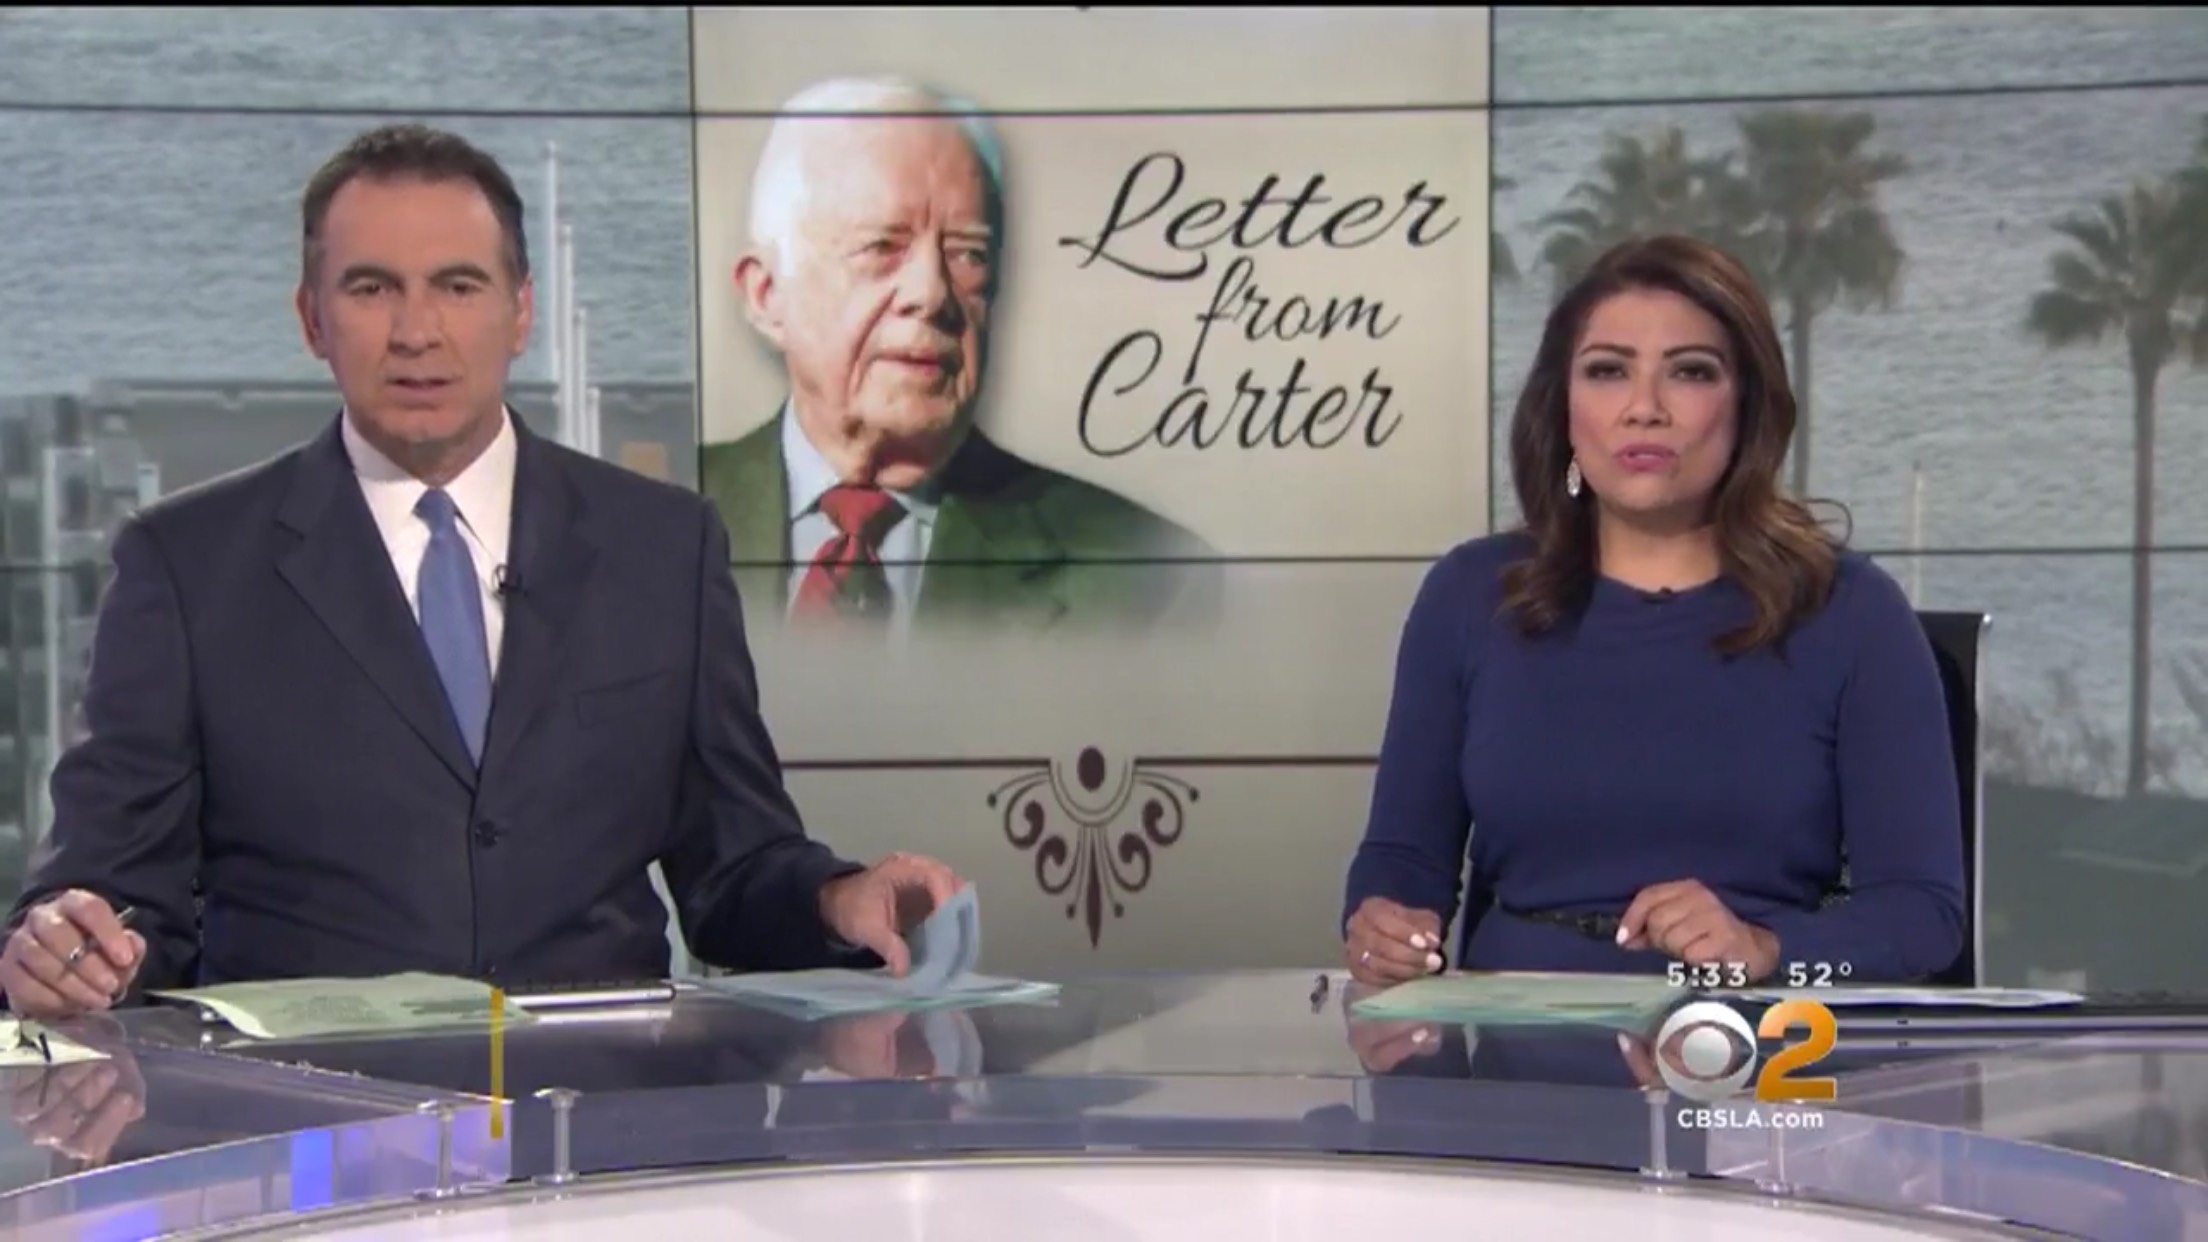 News chyron: "Letter from Carter"